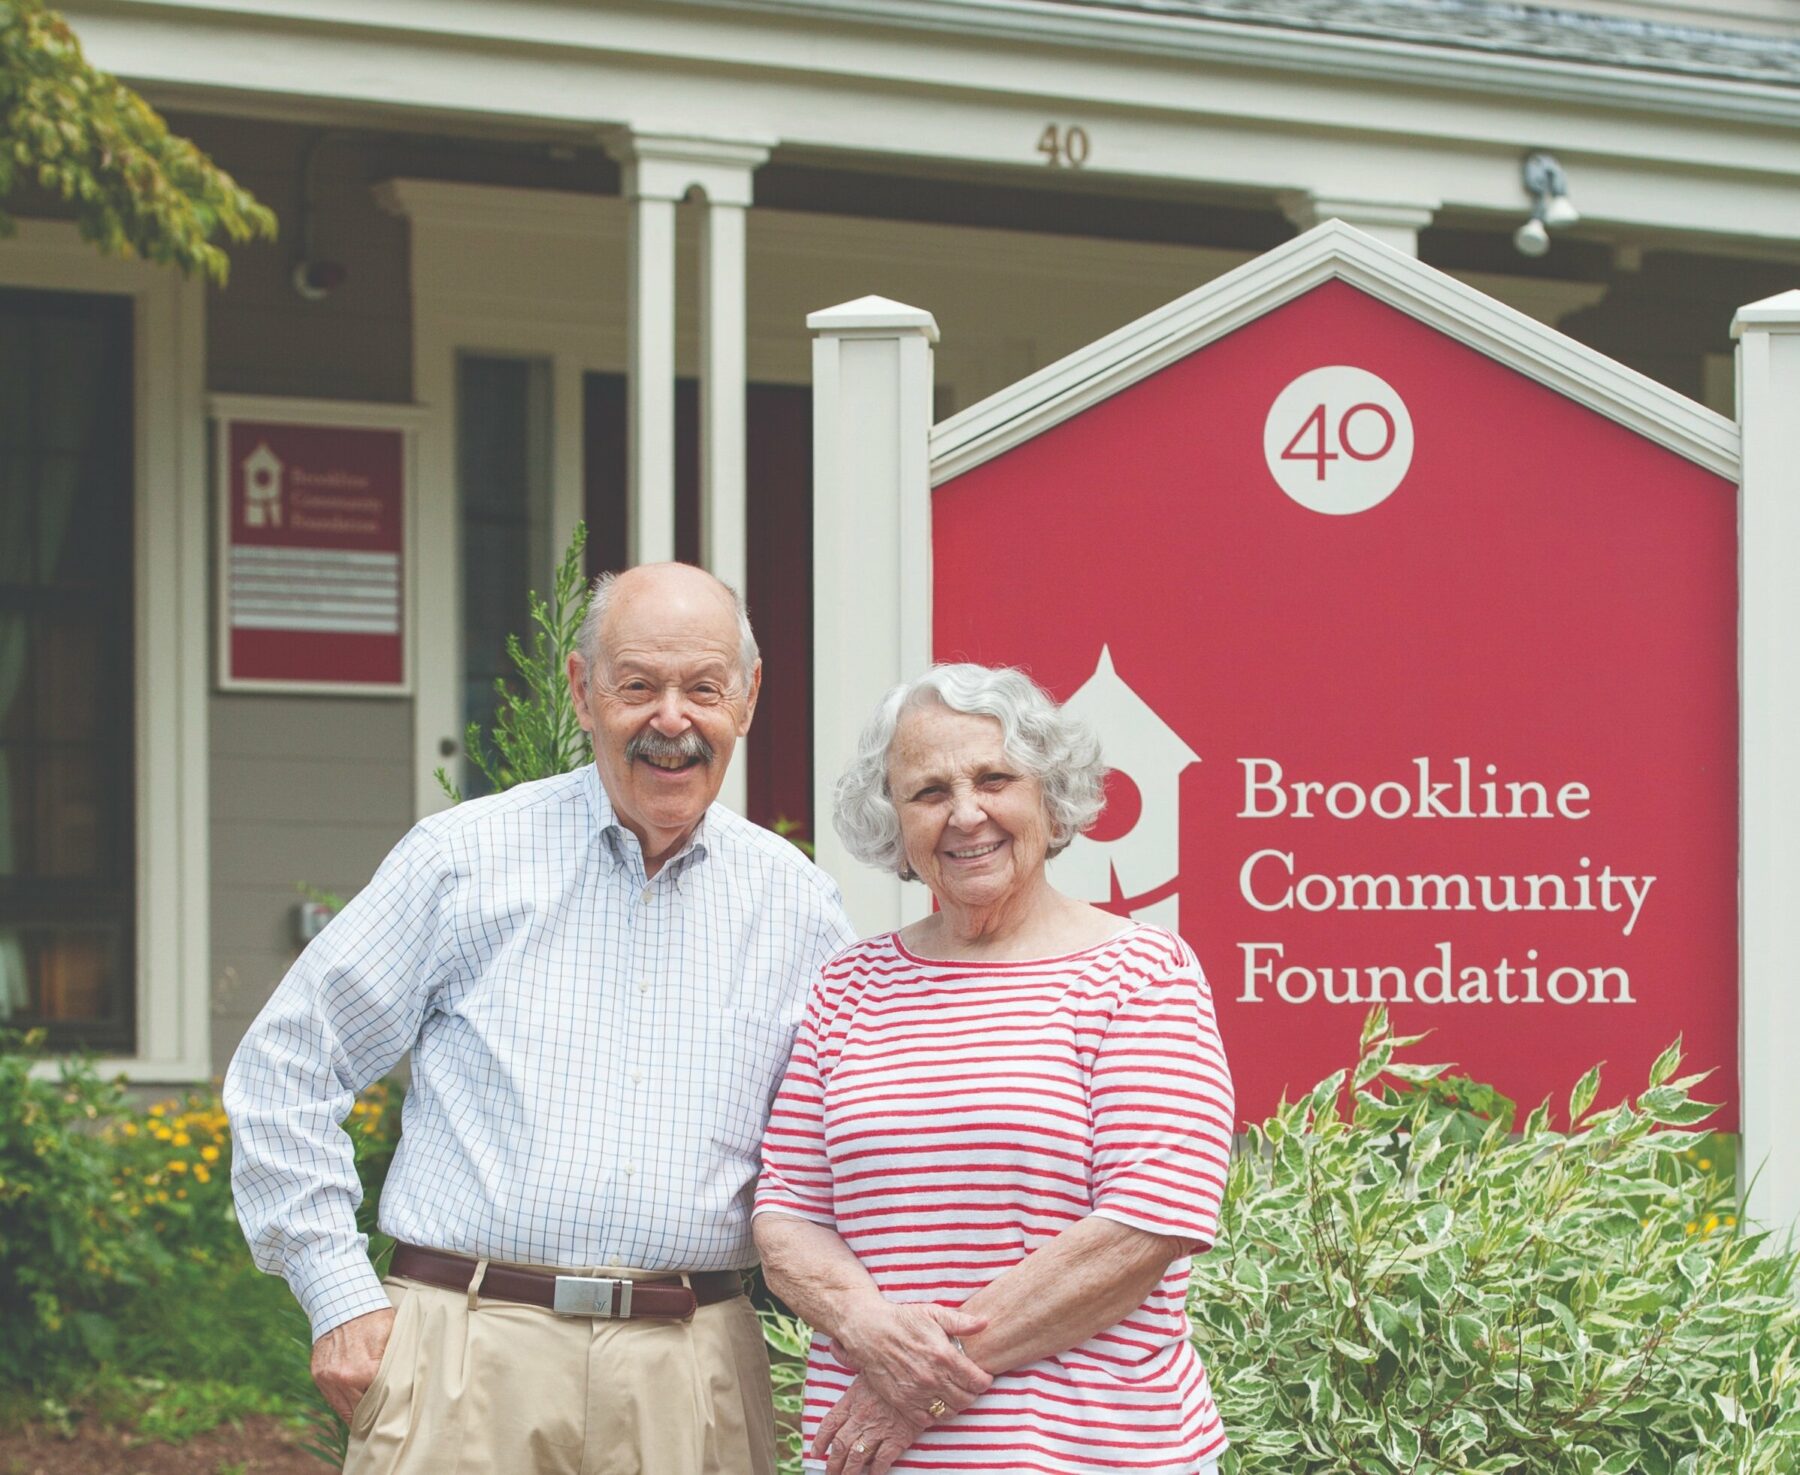 Nancy and Michael Sandman - Friends of the Brookline Community Foundation